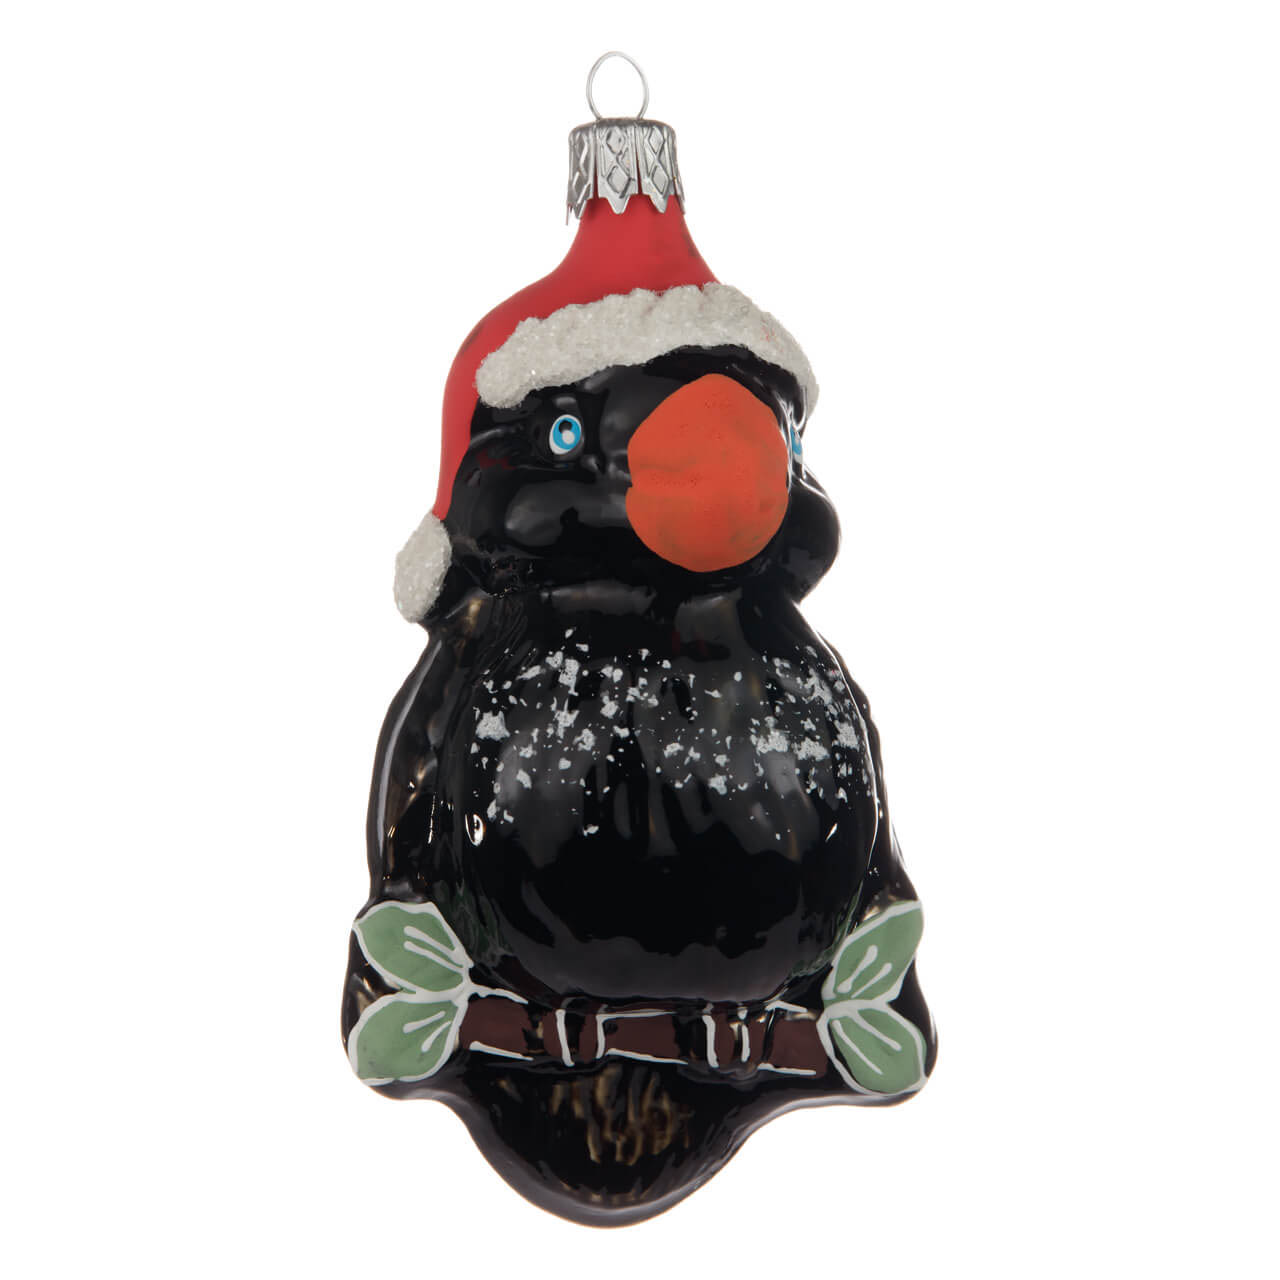 Funny Christmas blackbird